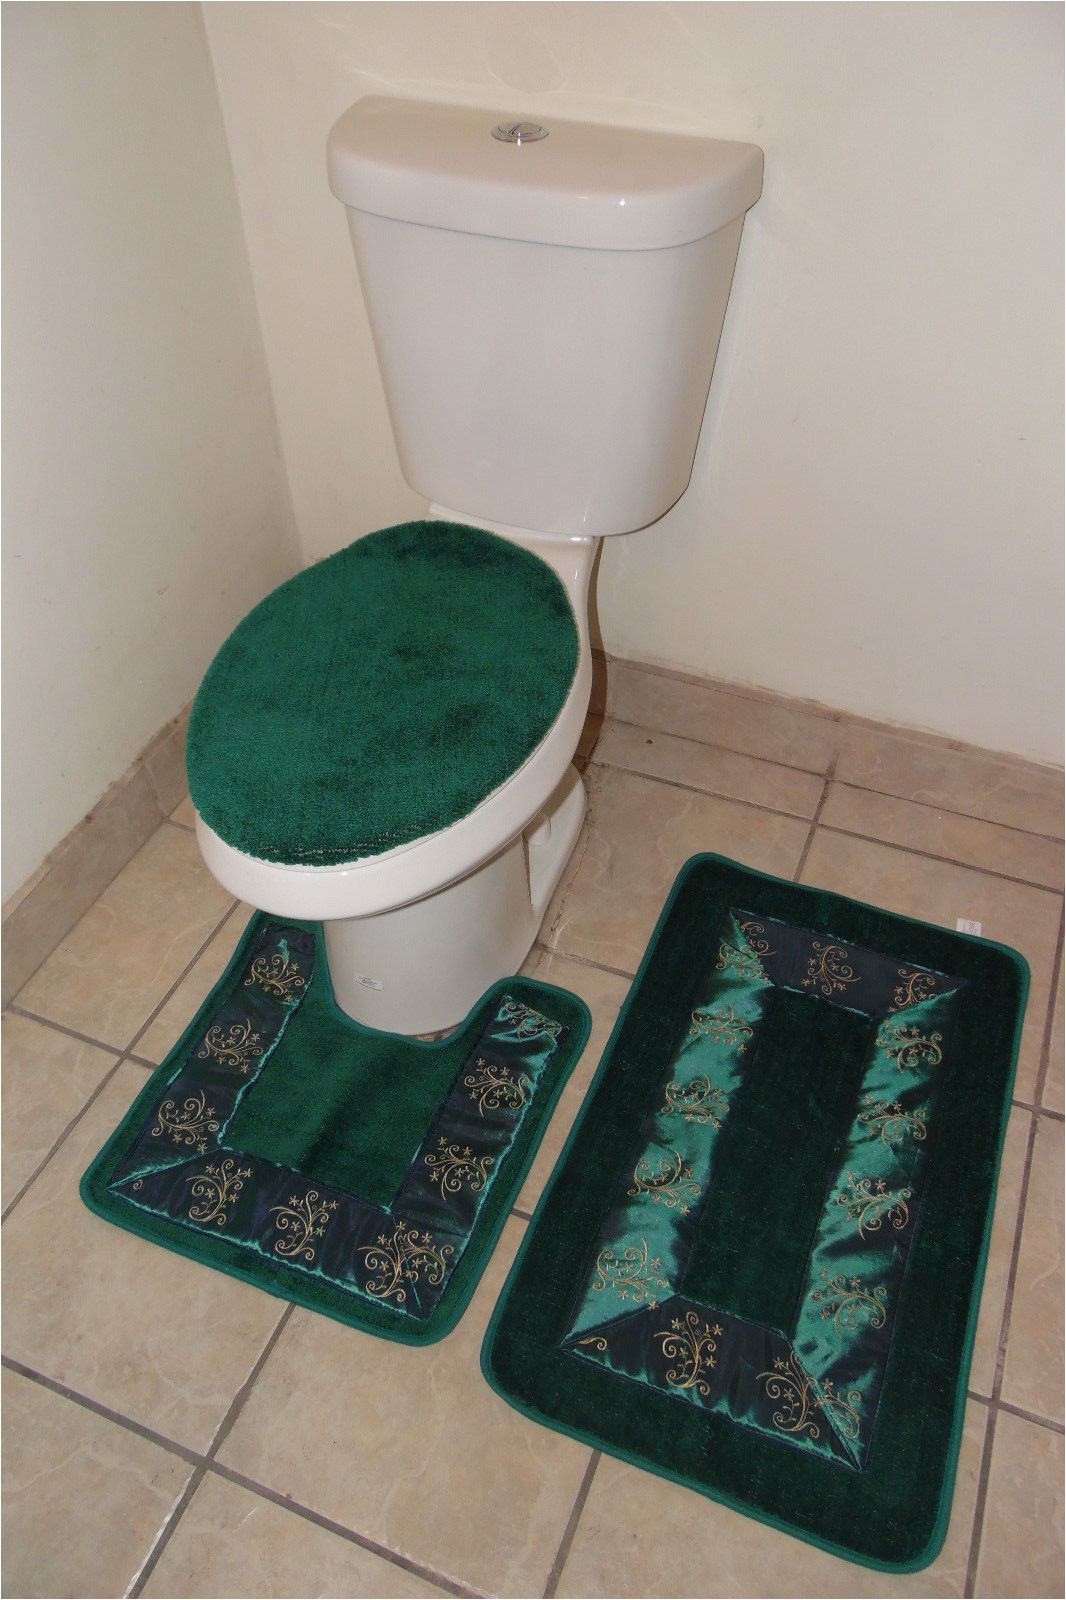 Bathroom Rug Set Green Bathmats Rugs and toilet Covers 3pc 5 Hunter Green